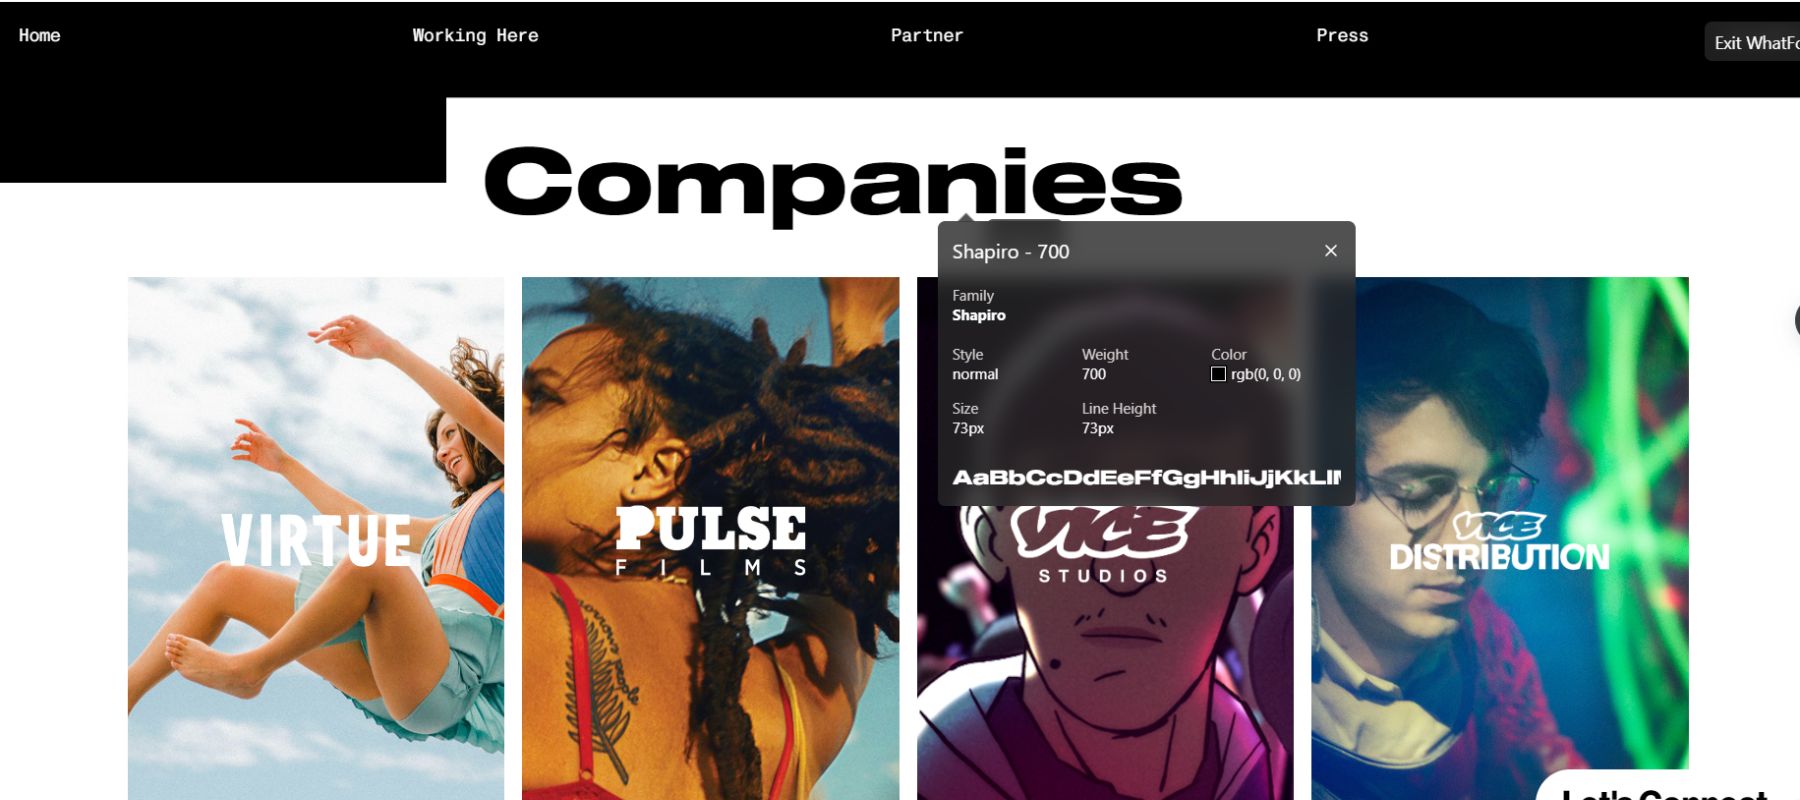 Vice Media uses Shapiro fonts on their headline